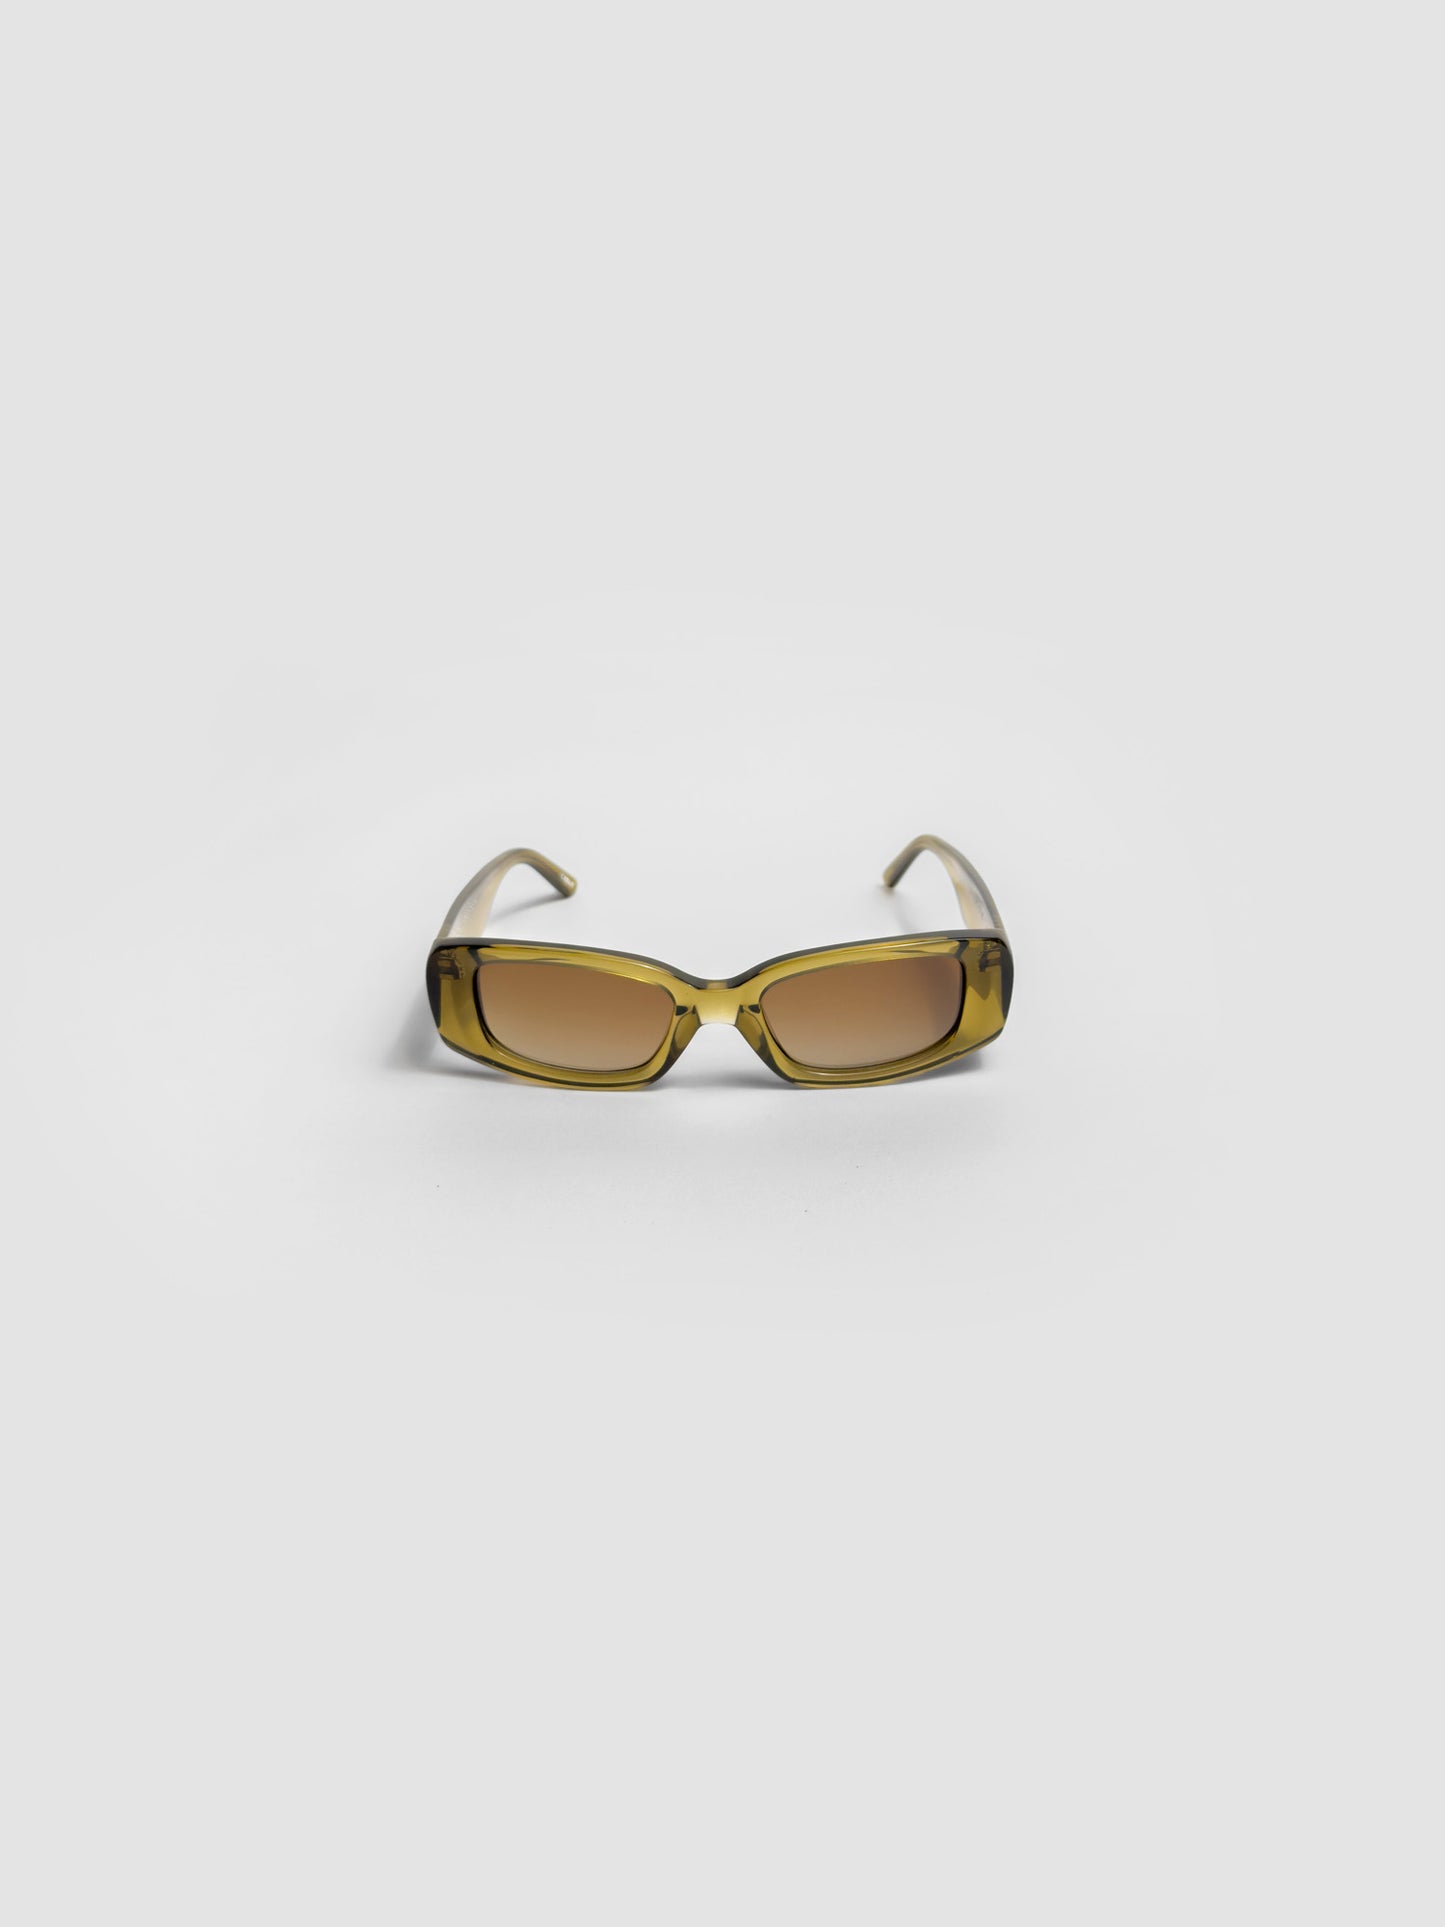 Copy of Sunglasses 10.2